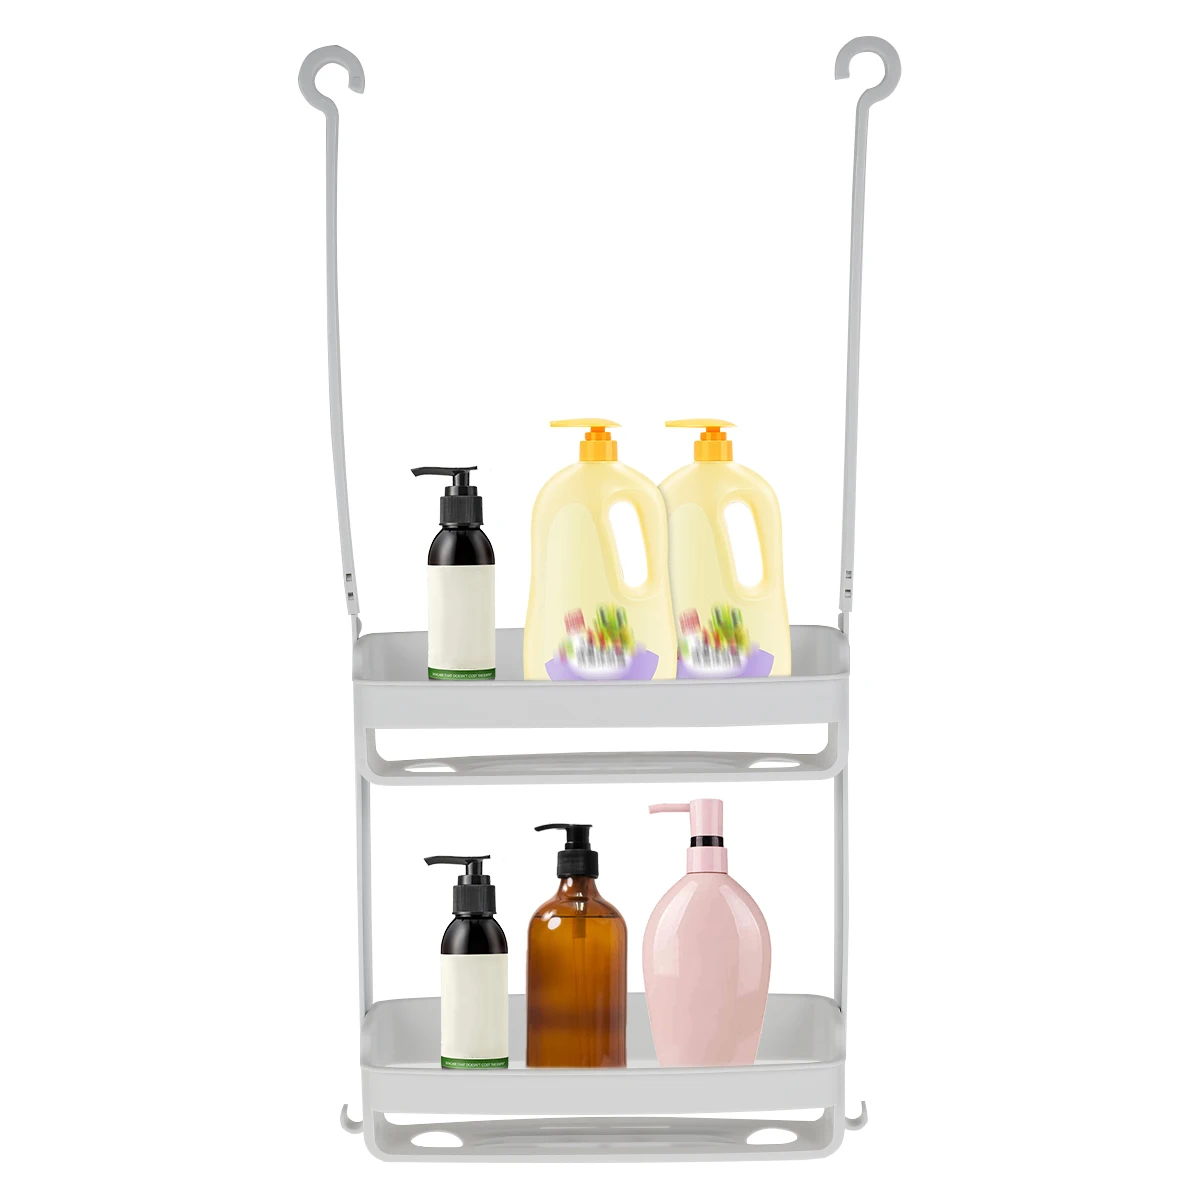 https://ae01.alicdn.com/kf/Sf928245c71ec4a4aa069168cbf45ea98A/Bathroom-Dubbele-Lagen-Hanging-Shower-Caddy-Shower-Organizer-Holder-Bathroom-Storage-Rack-Over-Shower-Head-for.jpg